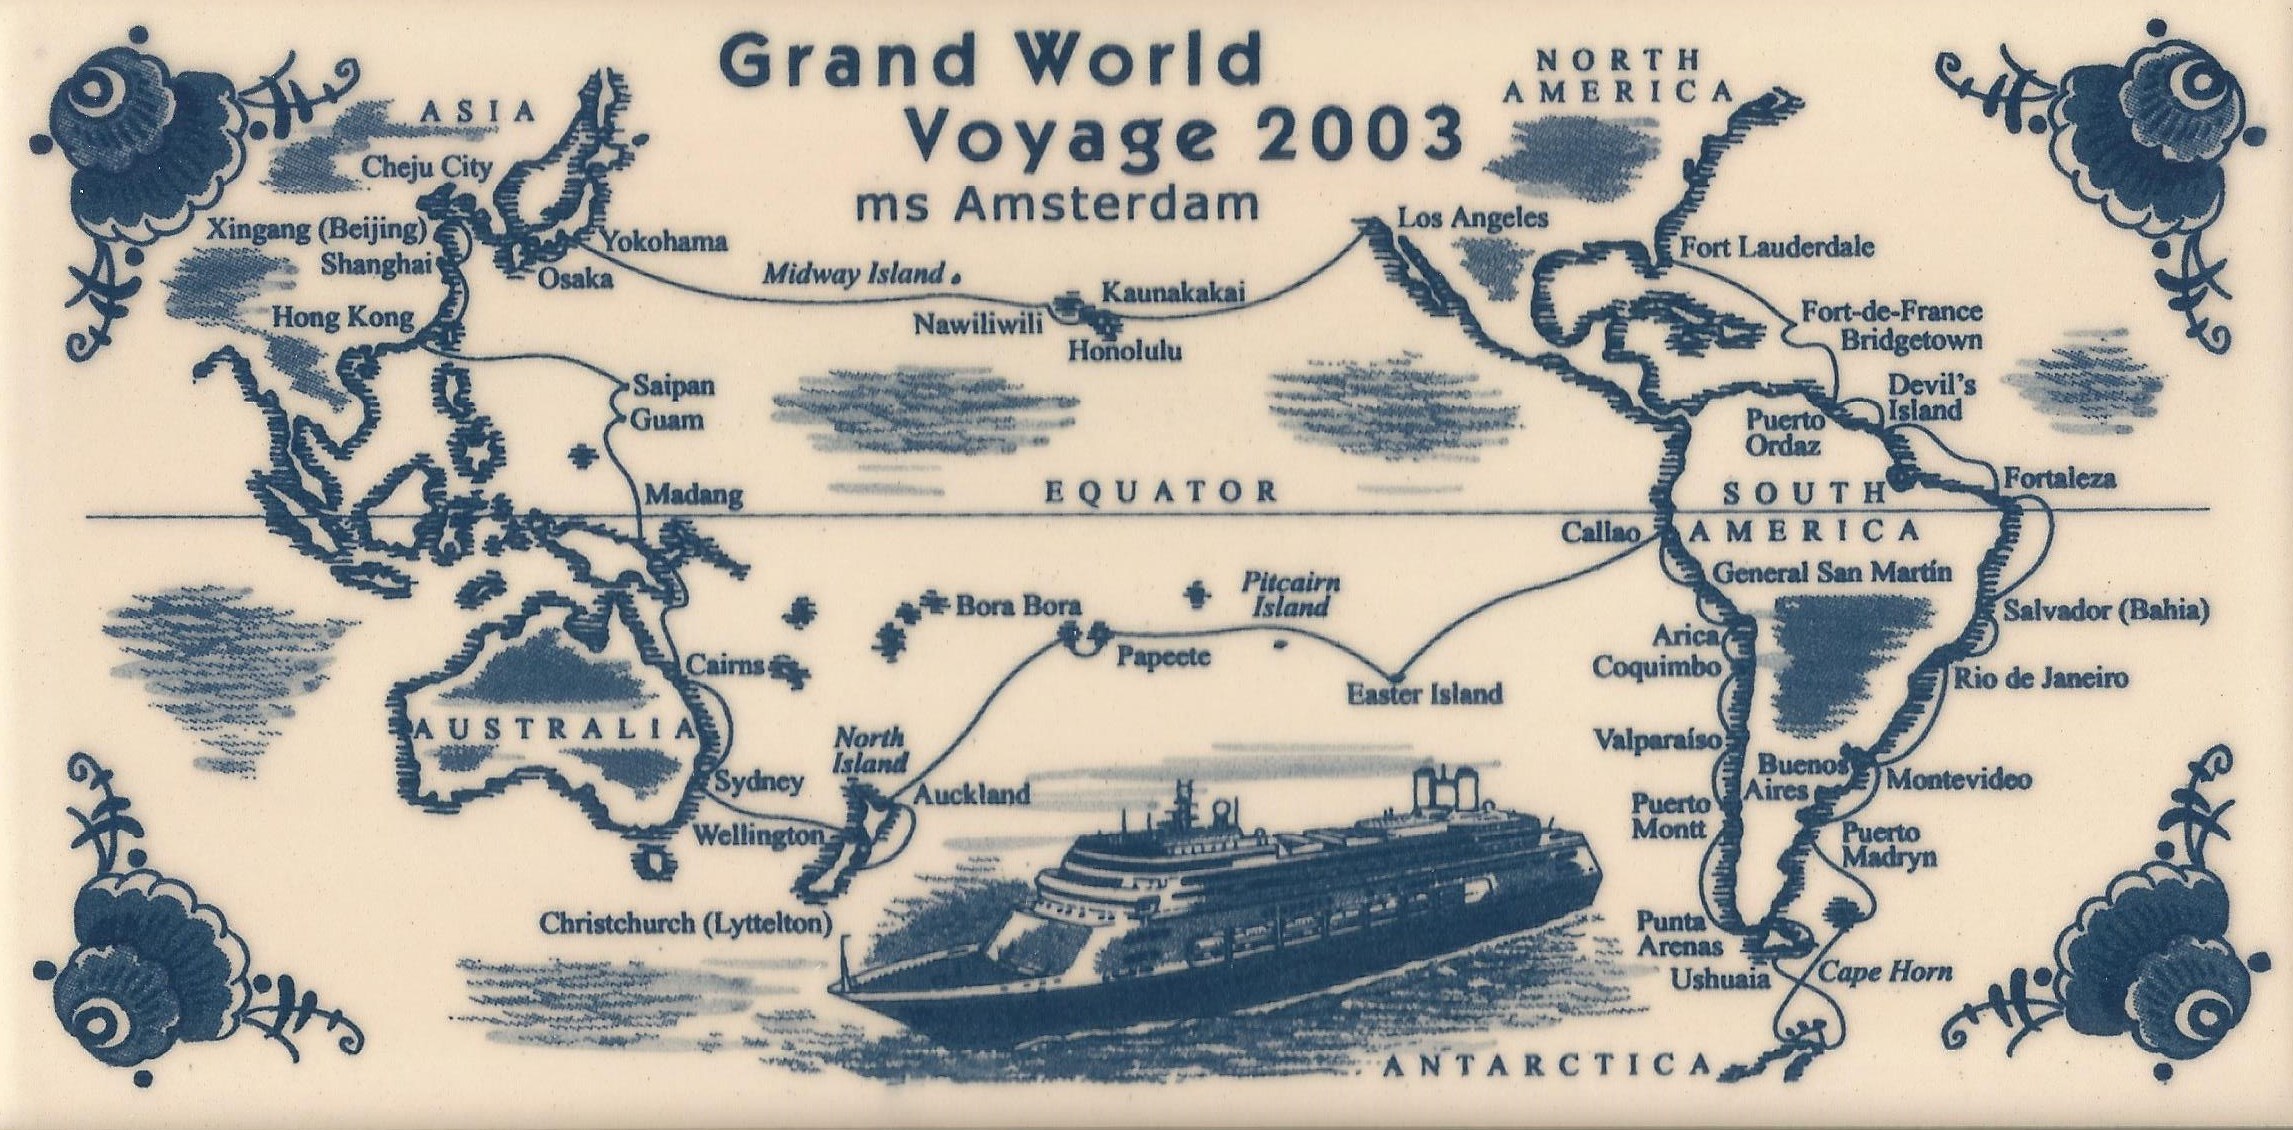 38 grand world voyage amsterdam 2003